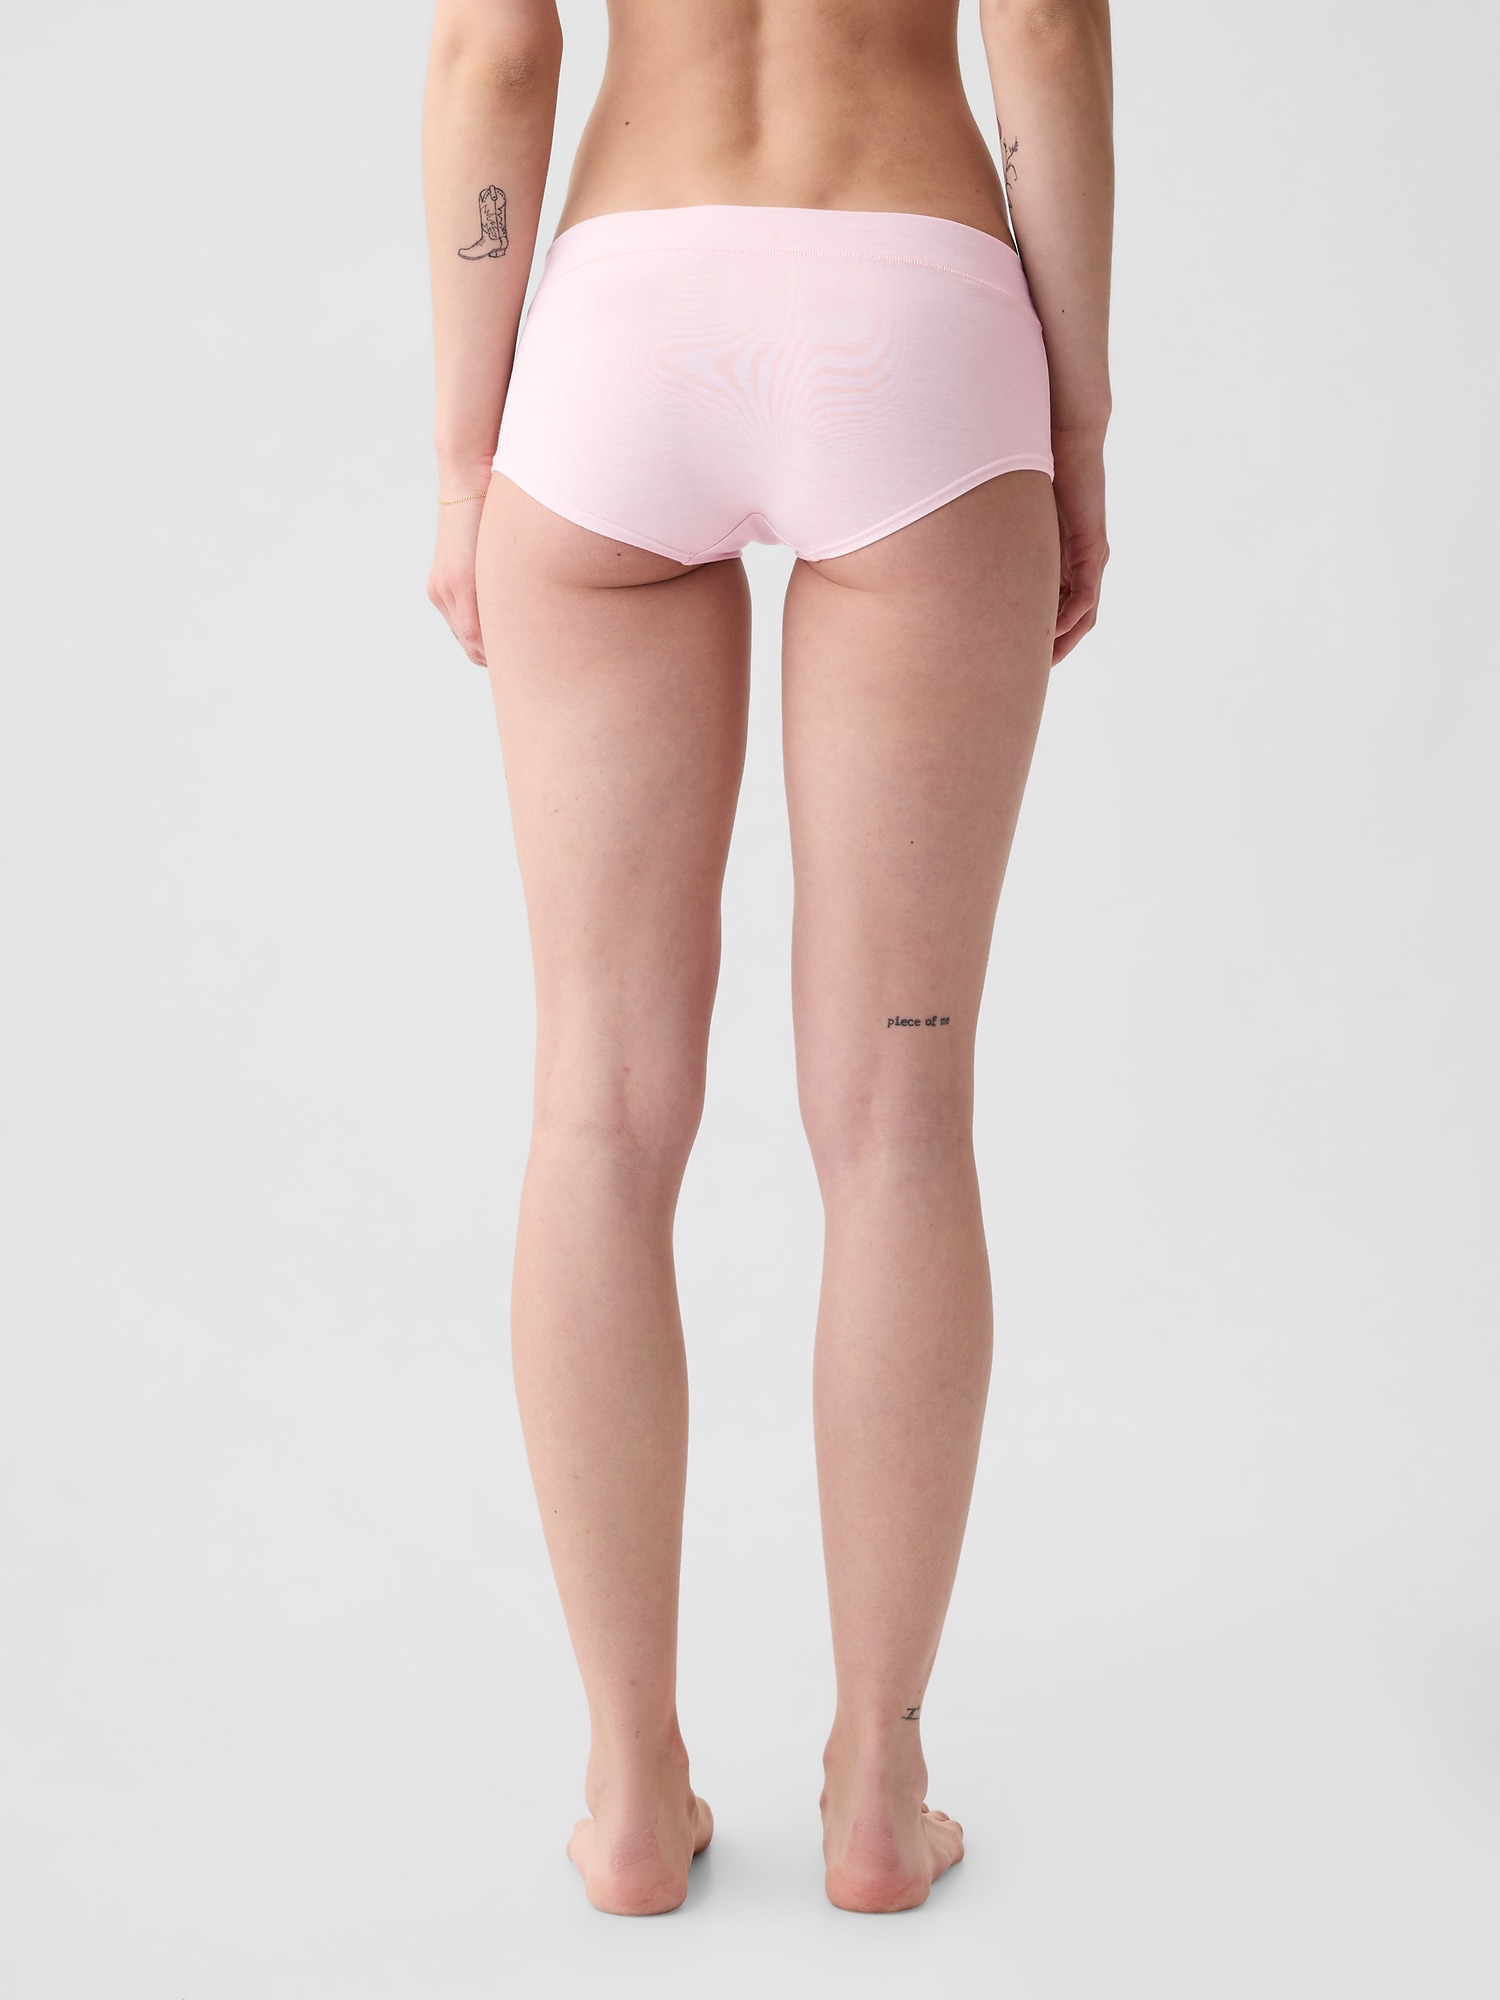 Gap Body Women's Panties for sale